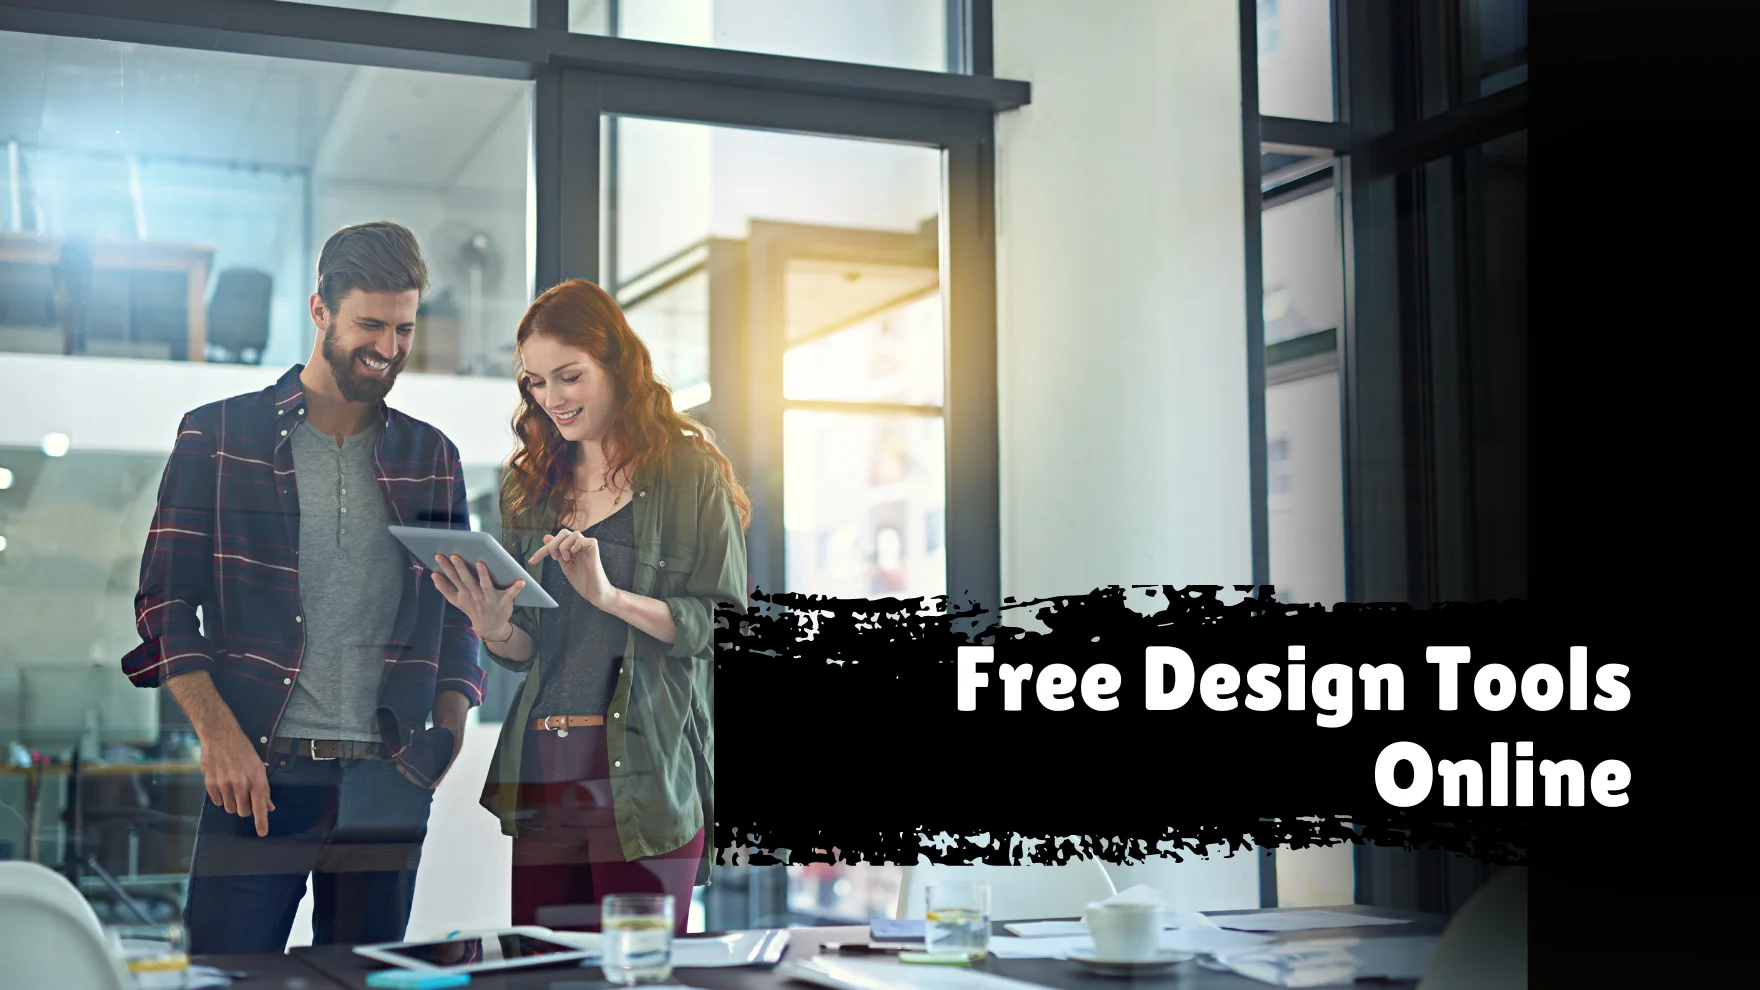 Free Design Tools Online